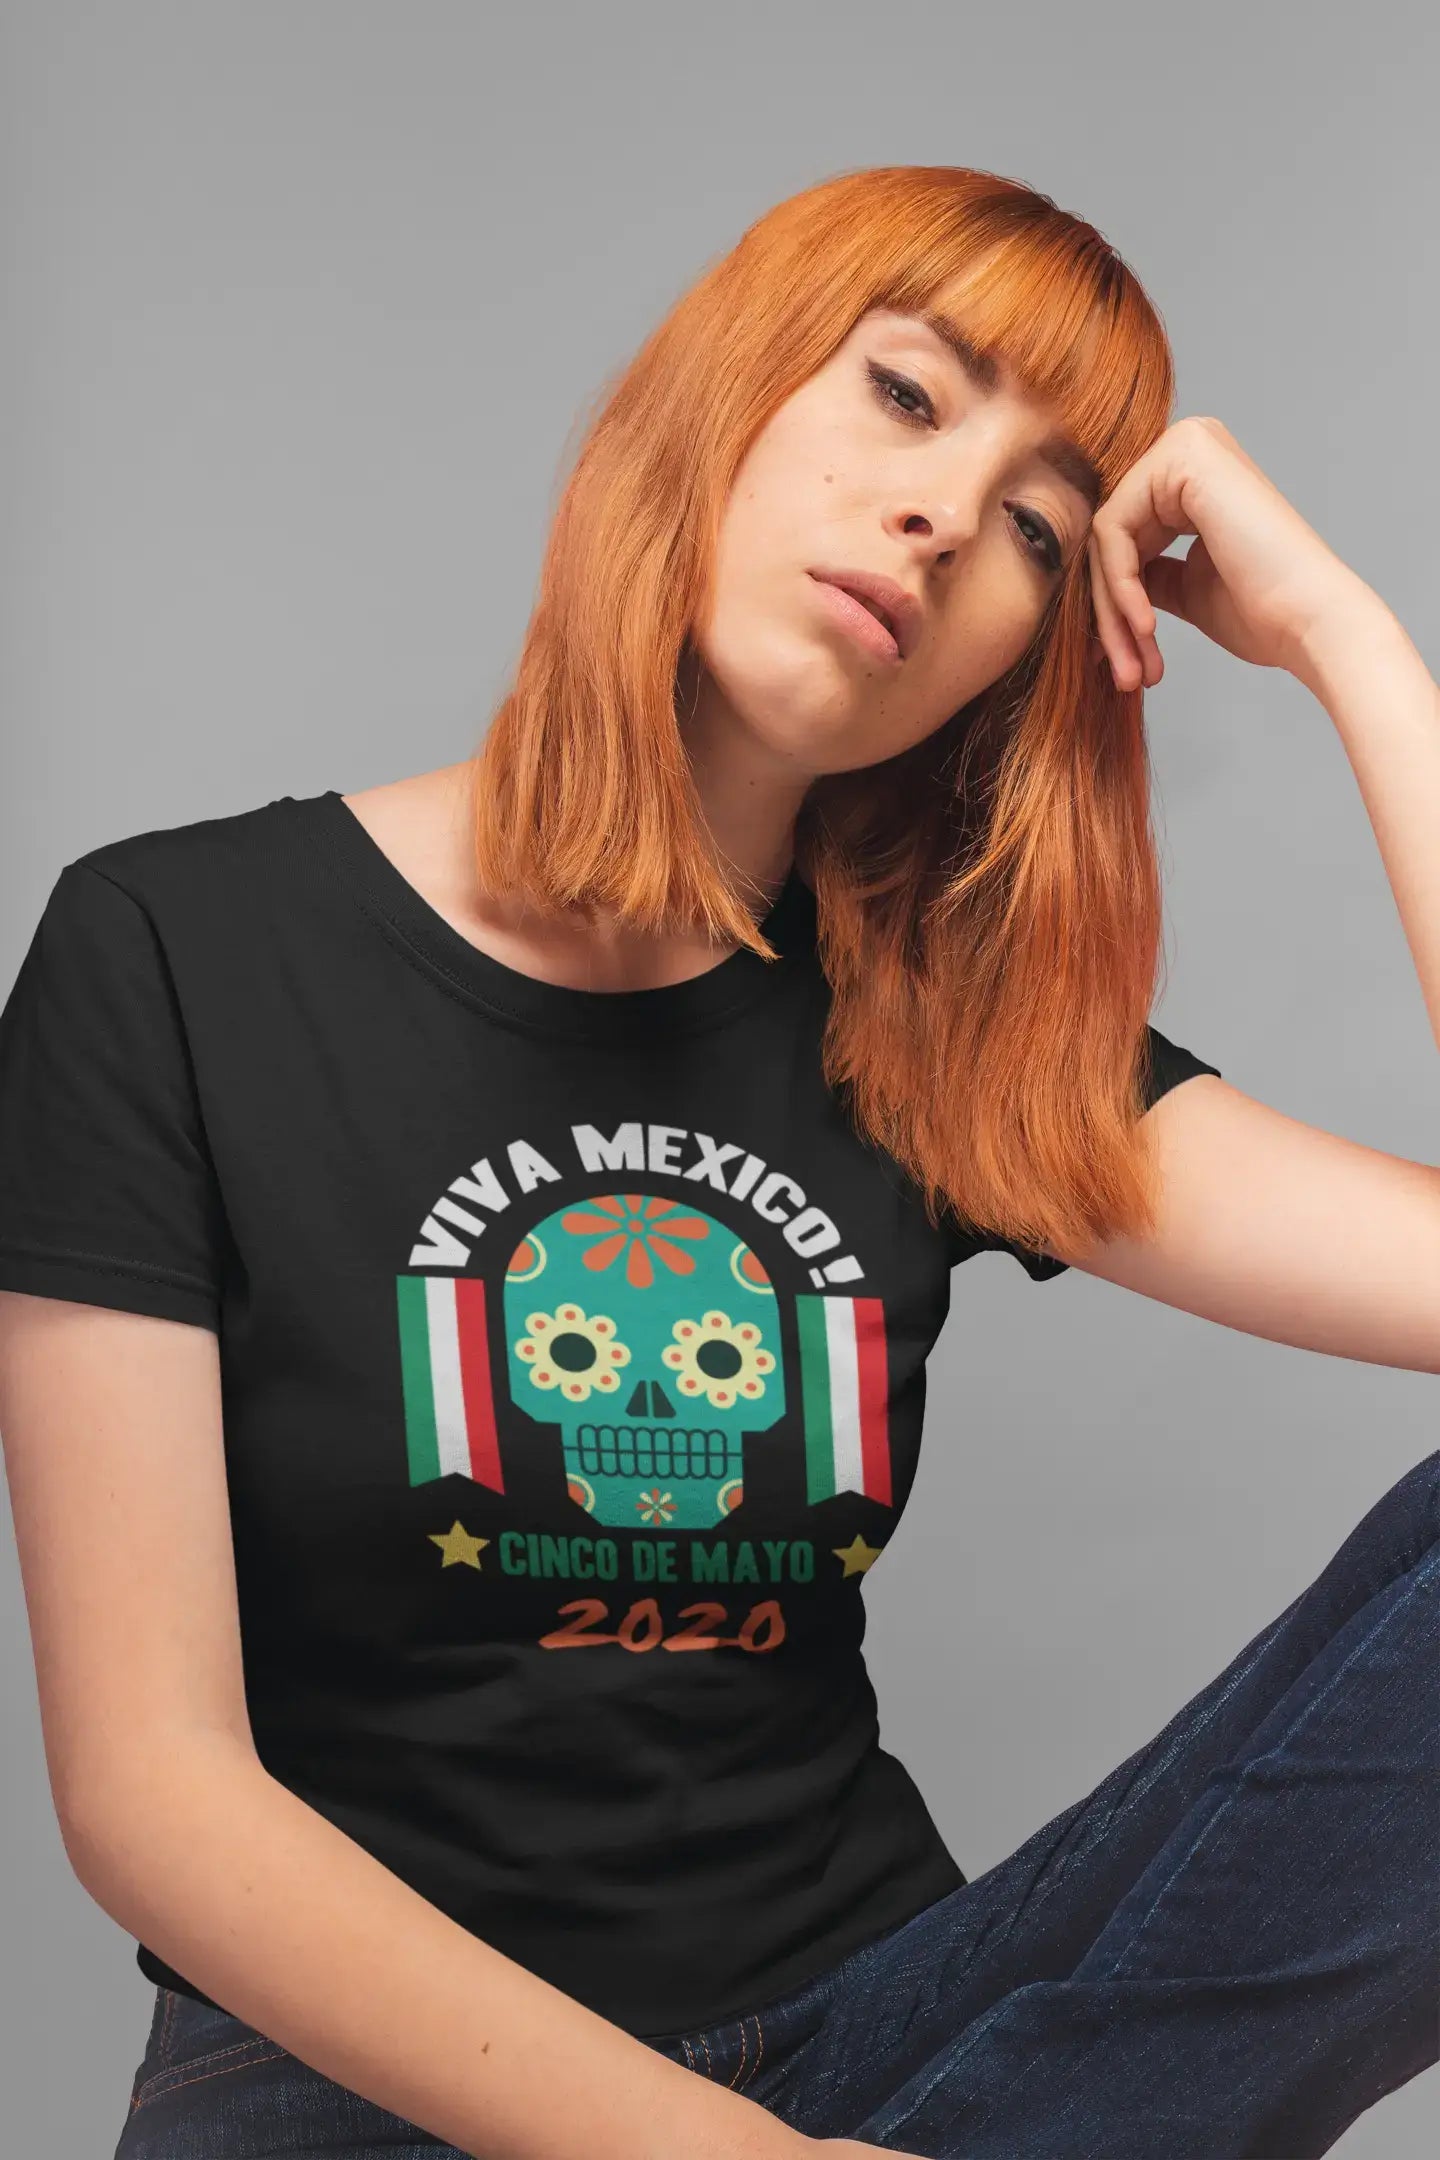 ULTRABASIC Women's Organic T-Shirt Viva Mexico - Cinco de Mayo 2020 - Funny Mexican Tee Shirt